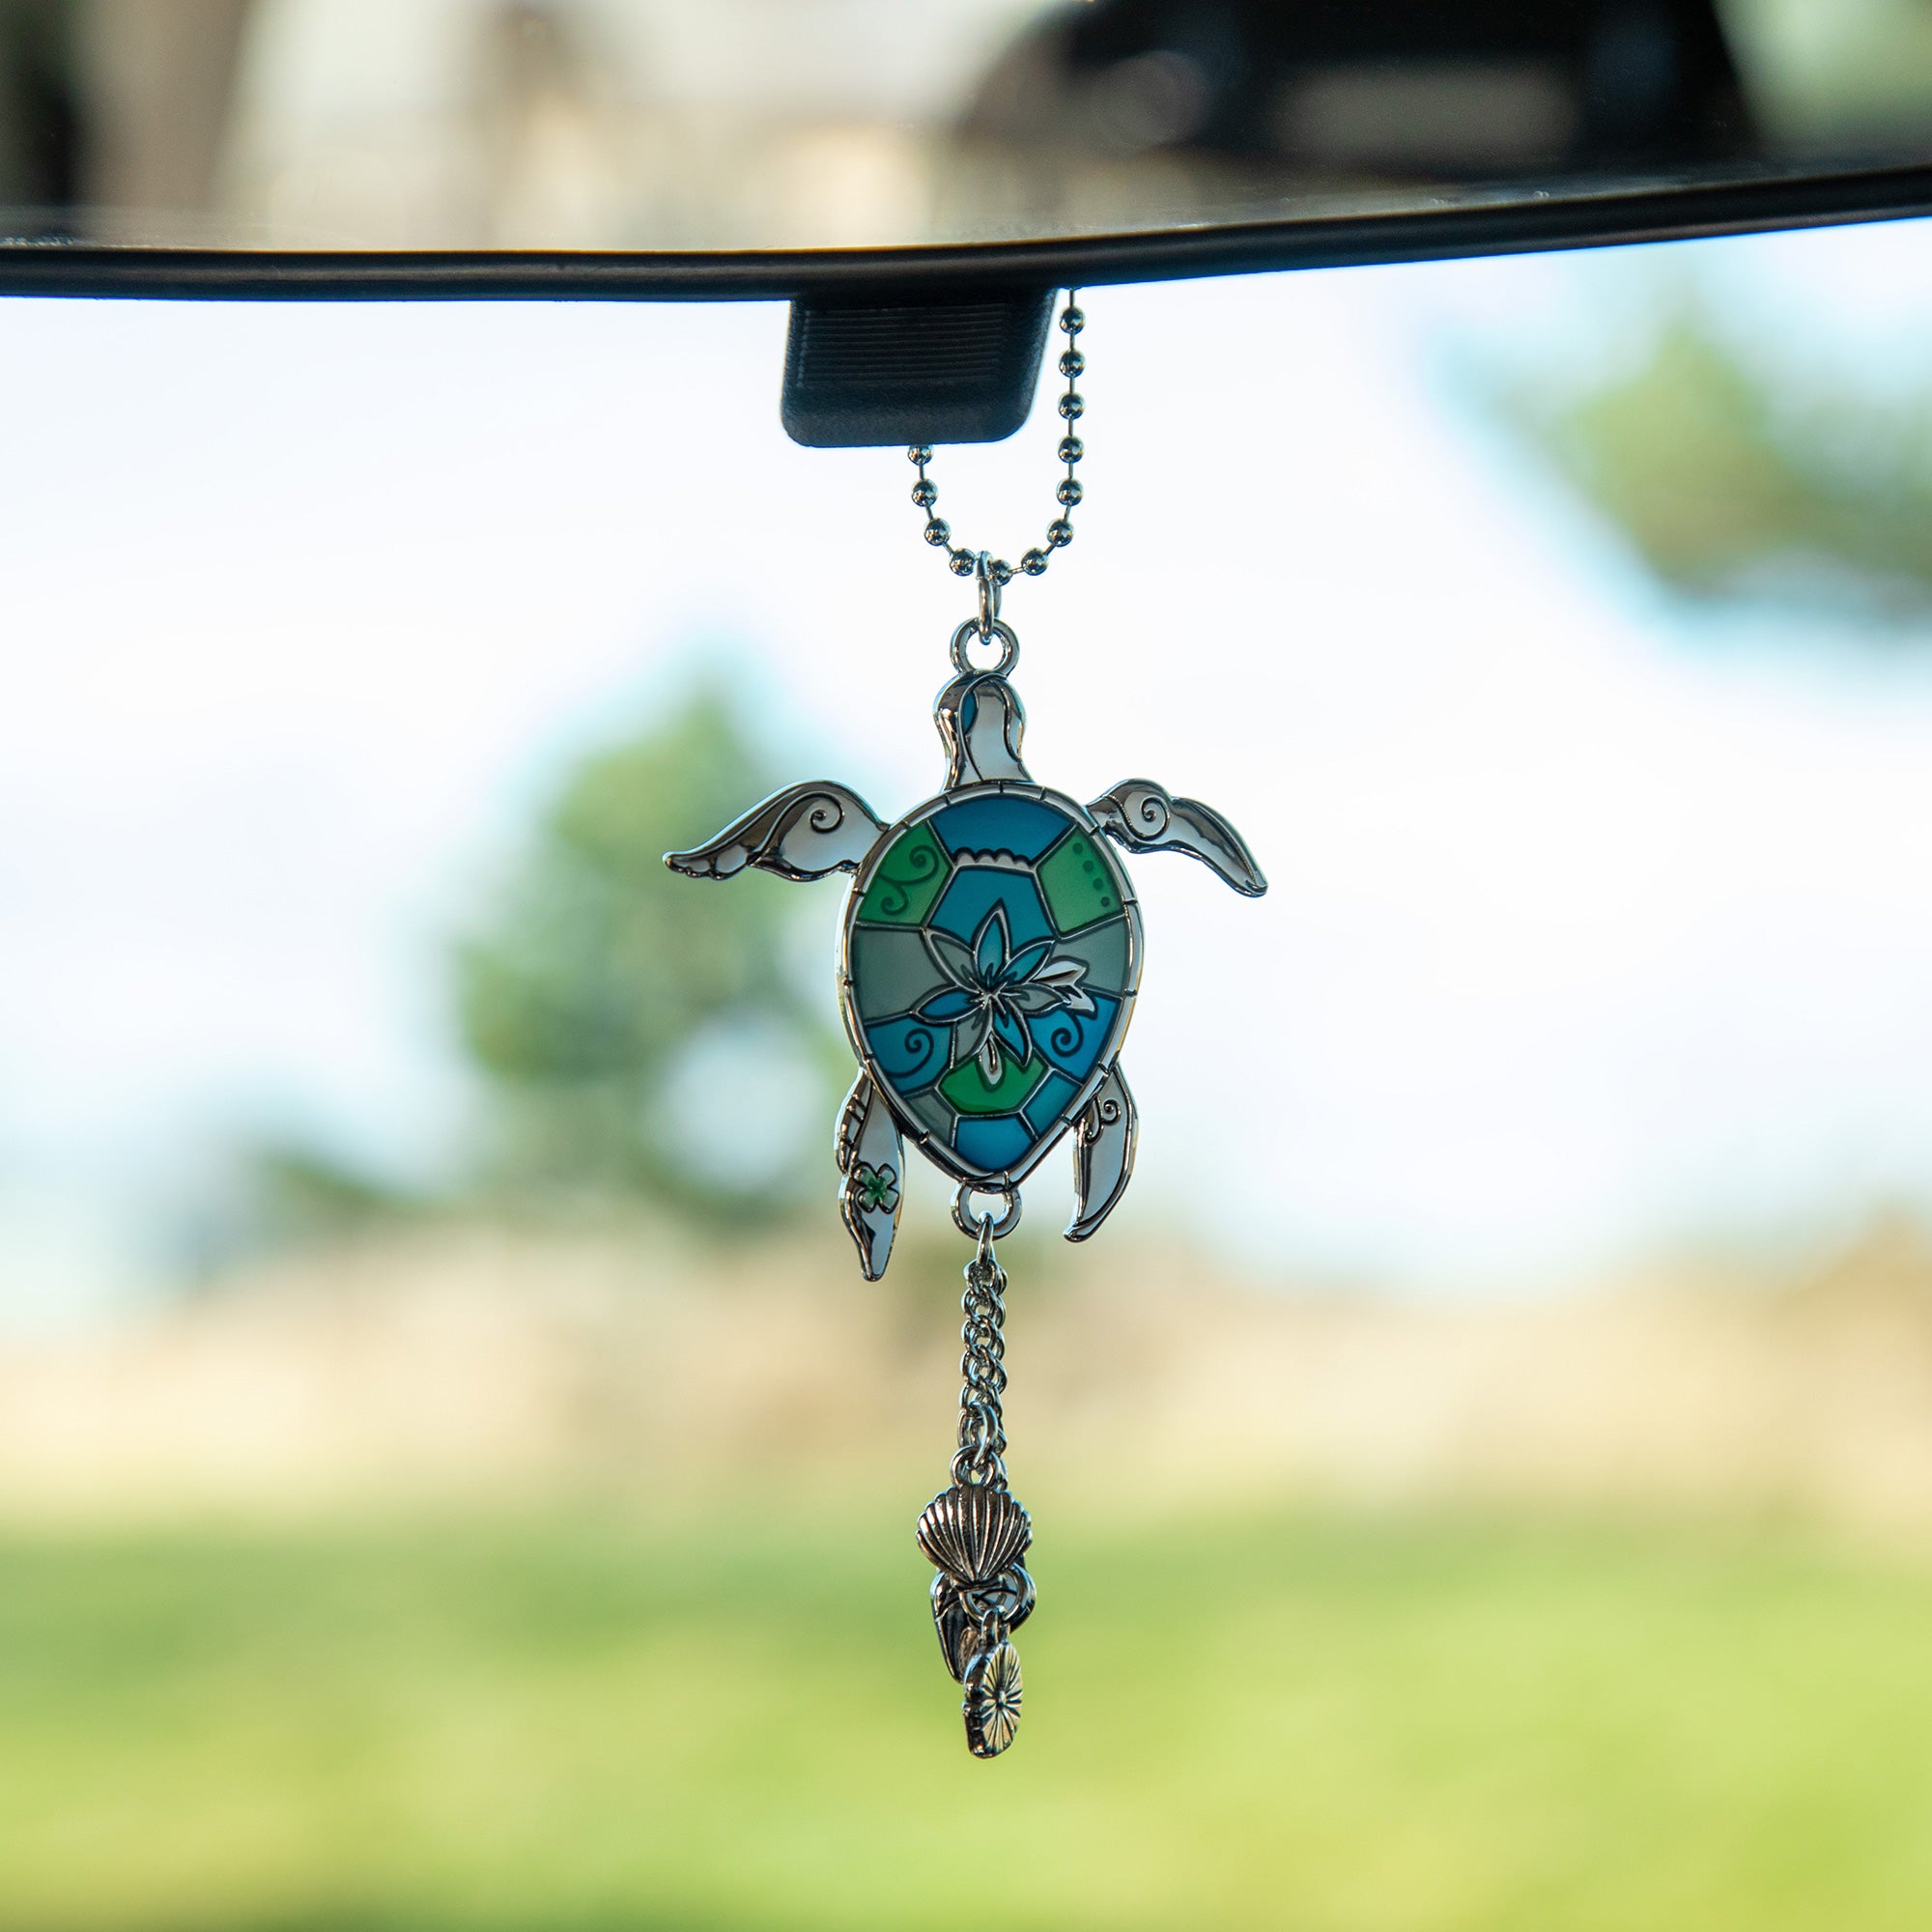 Colorful Creations Car Charm - Peacock